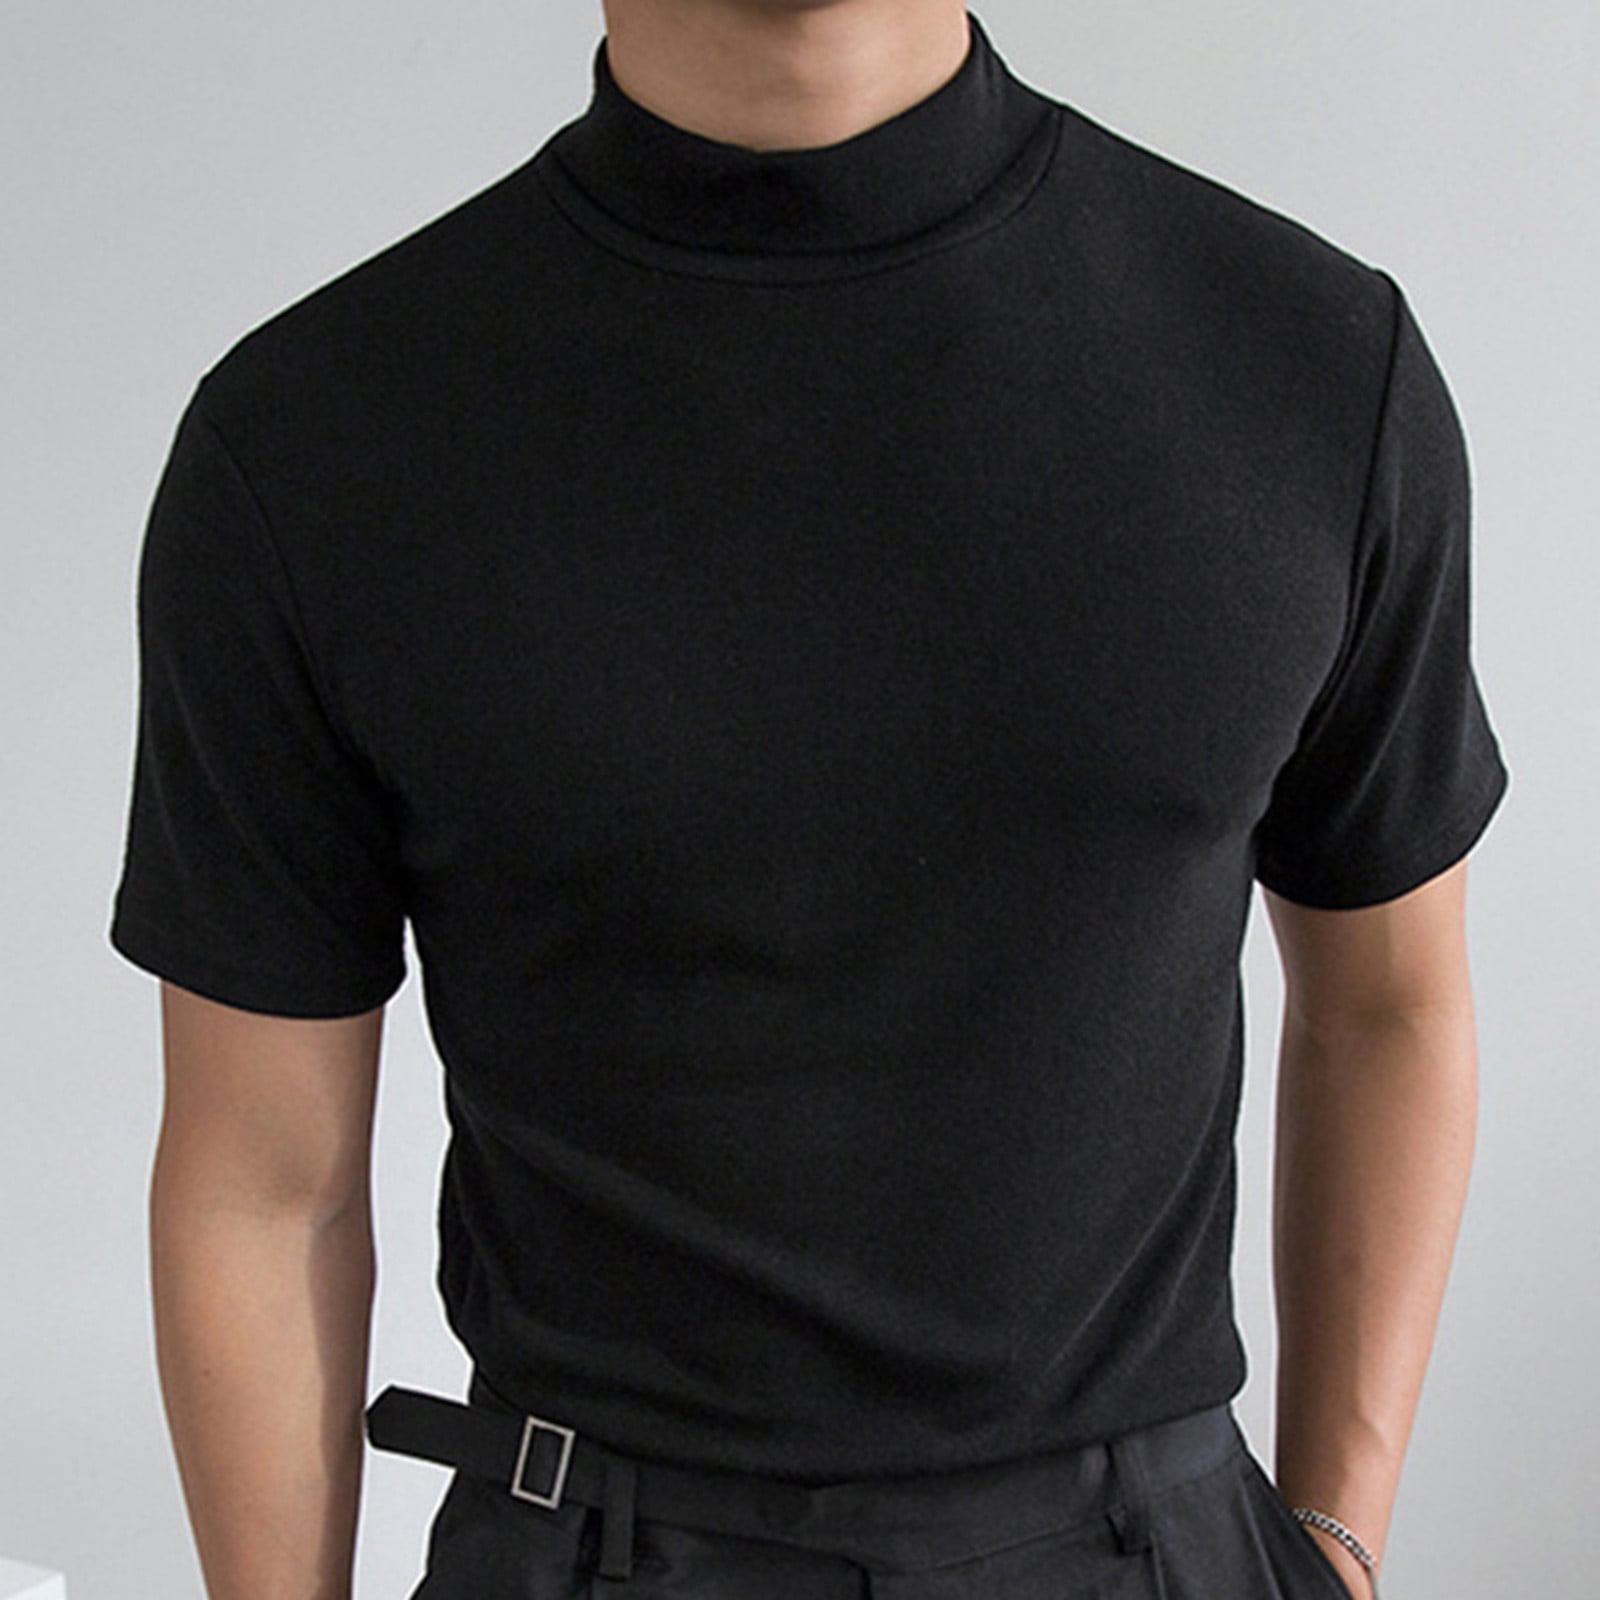 Haxmnou Mens T Shirt Short Sleeve Basic Turtleneck Slim Fit